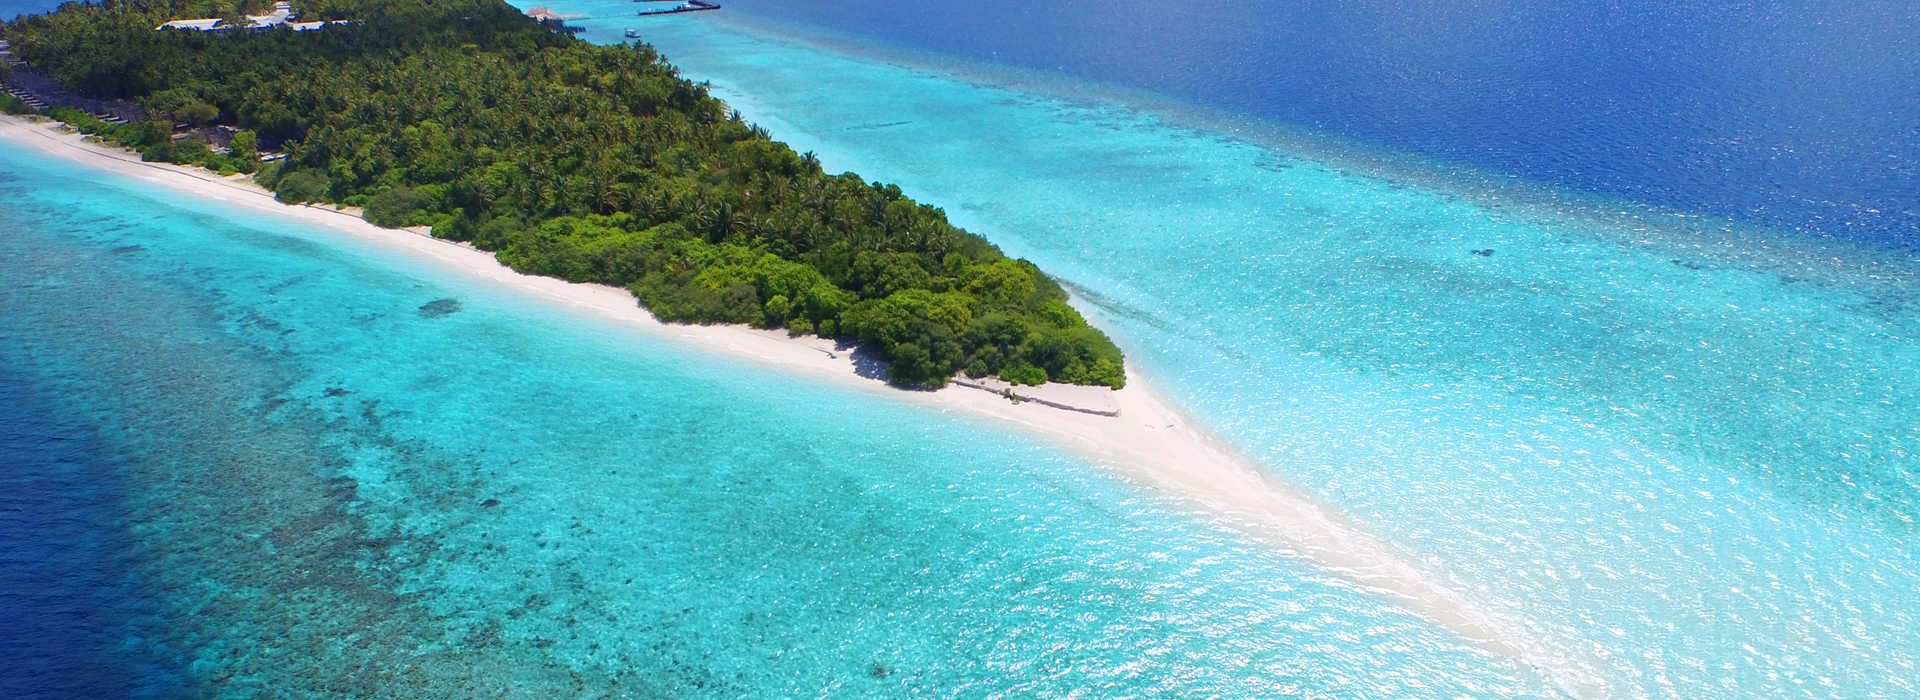 maldives-dhigali-main